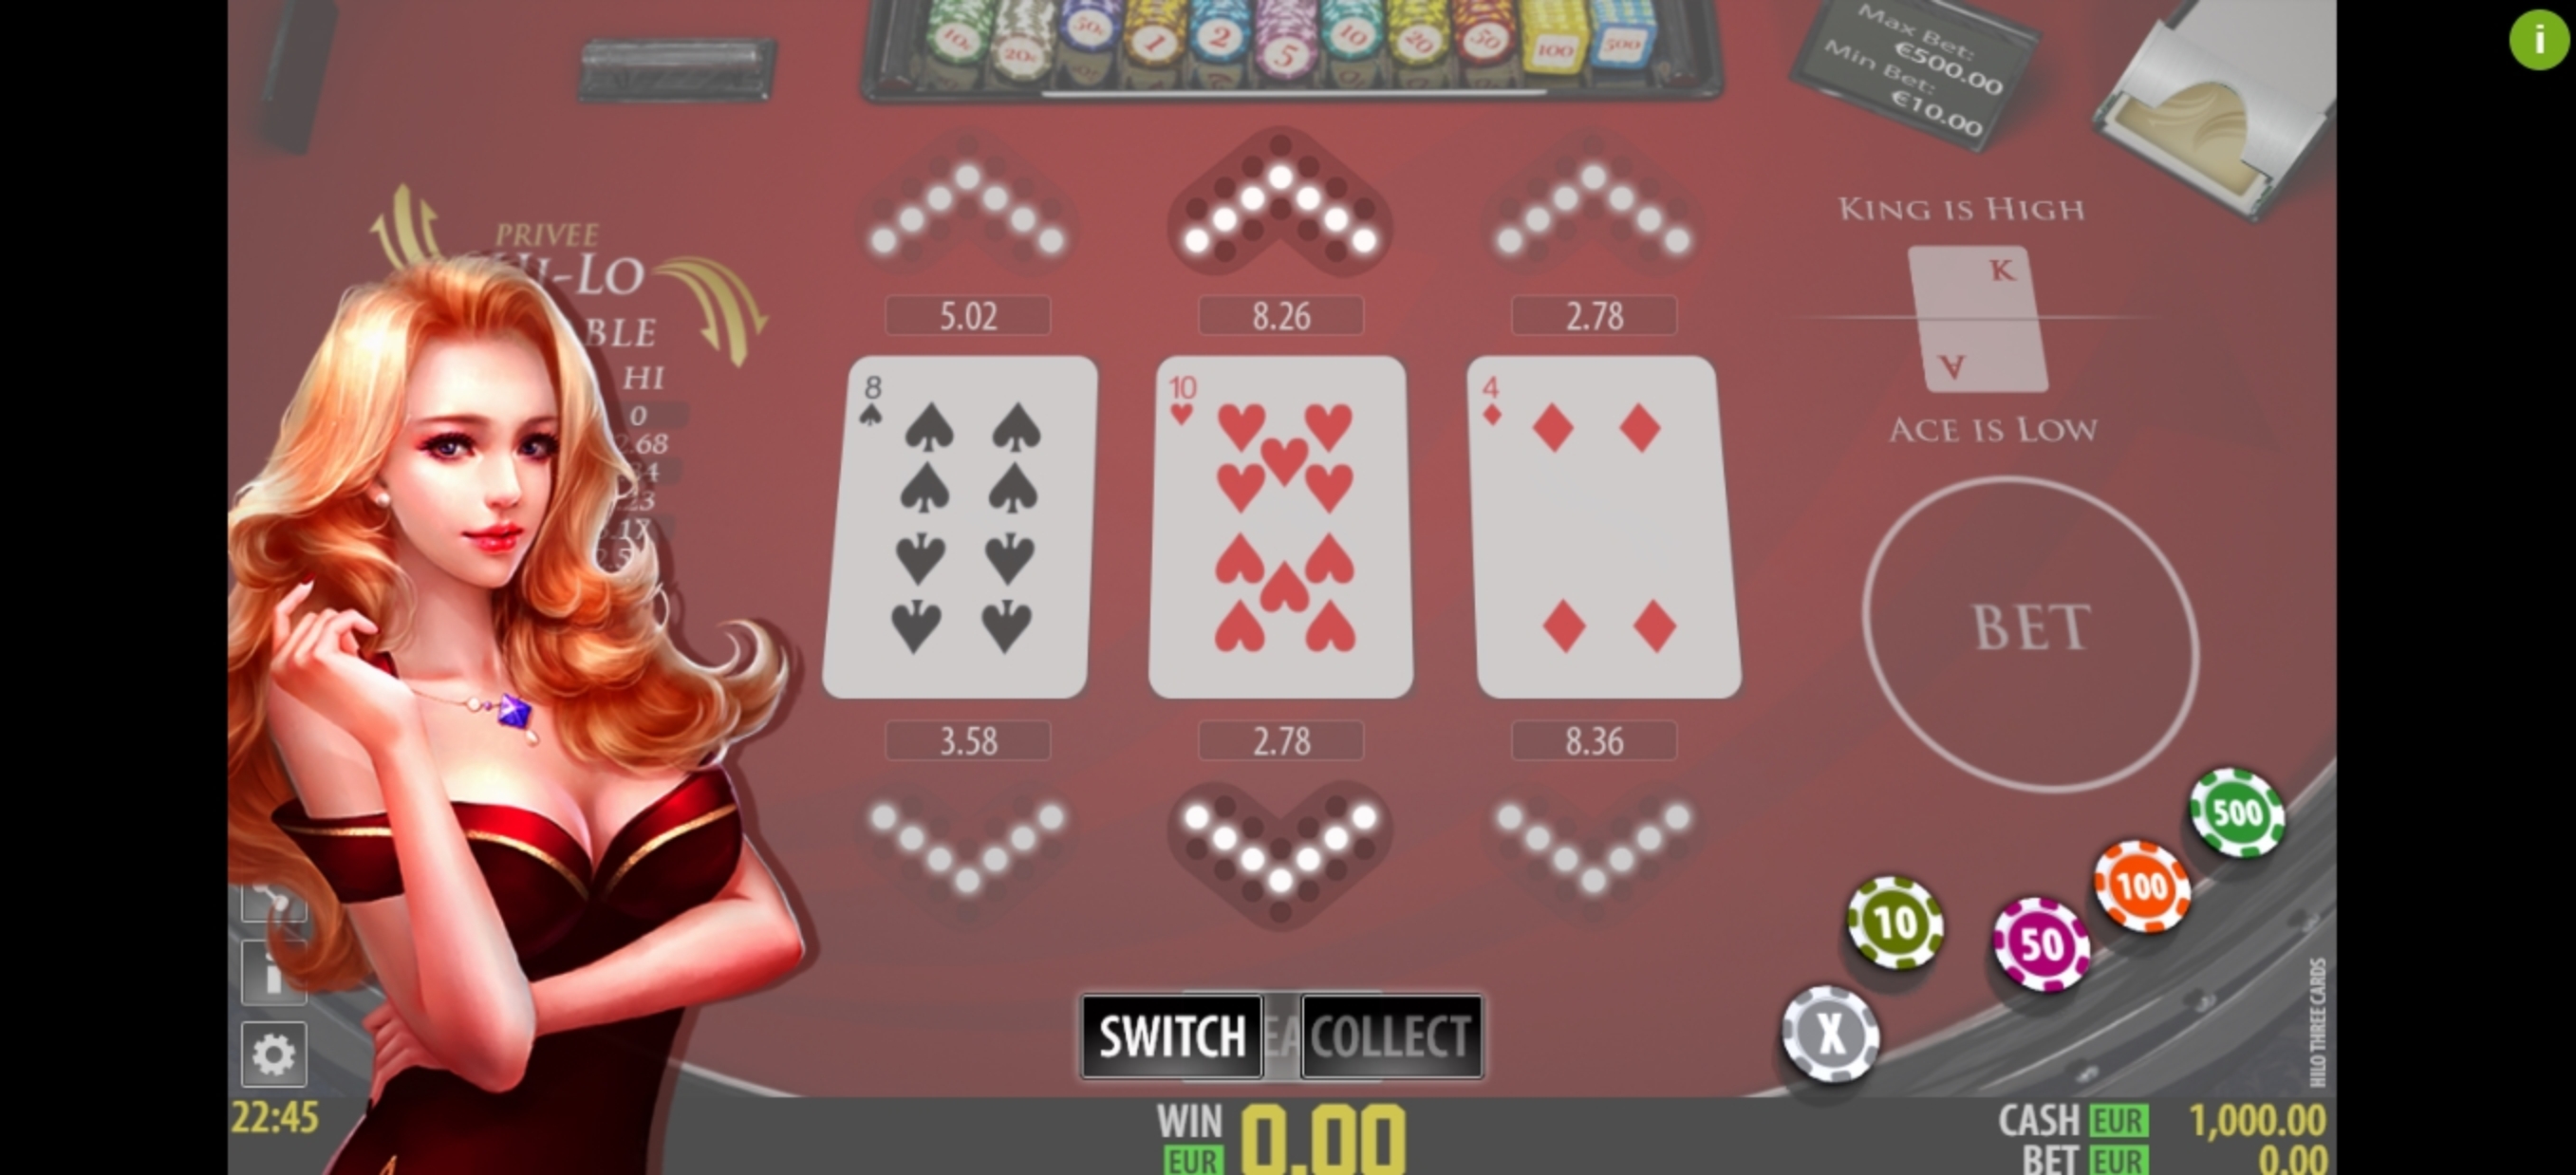 Play Hi-Lo Privee Free Casino Slot Game by World Match